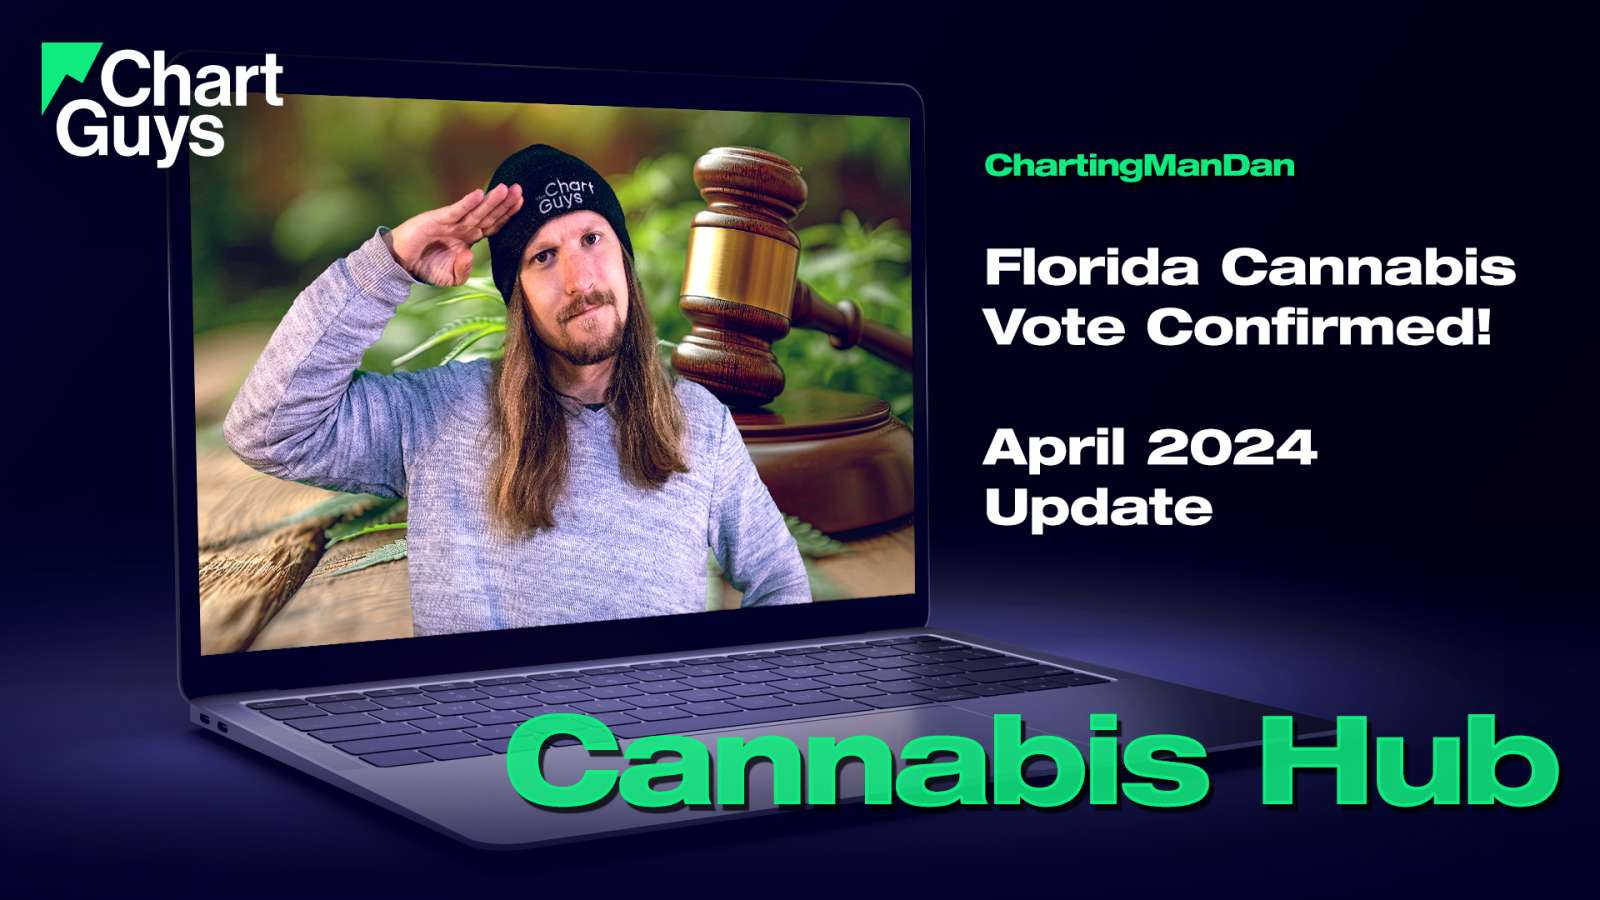 Update April 2024: Florida Cannabis Vote Confirmed!